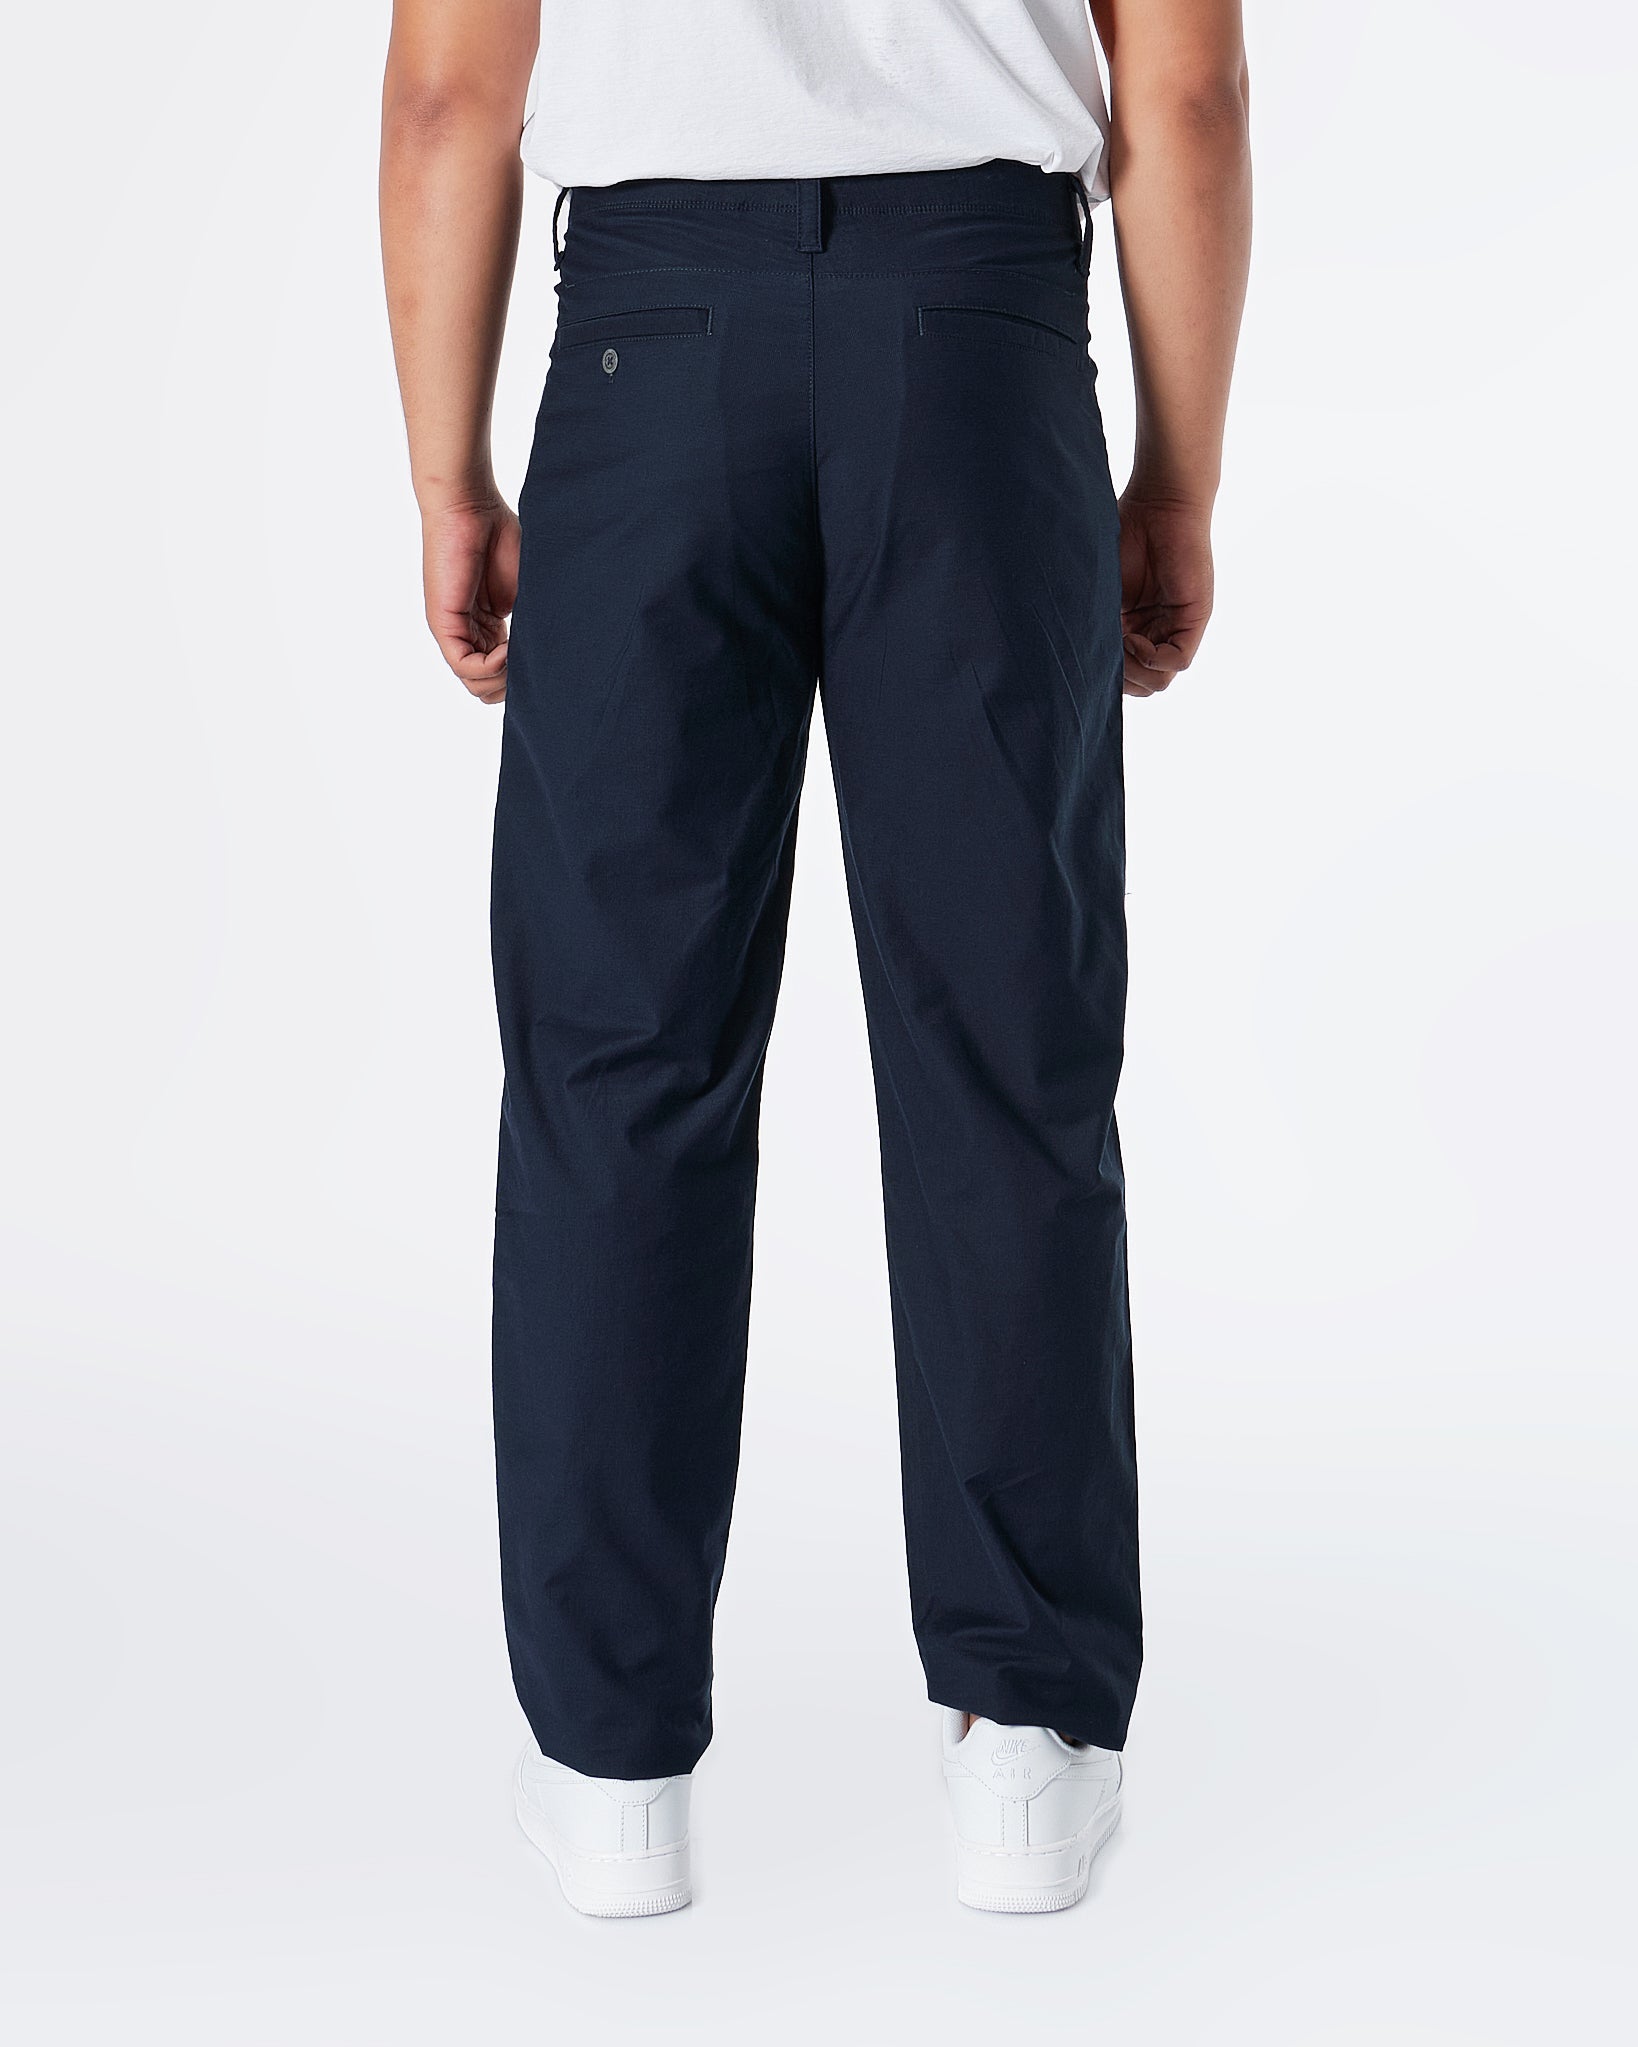 MOI OUTFIT-UA Casual Fit Men Dark Blue Khaki Pants 28.90